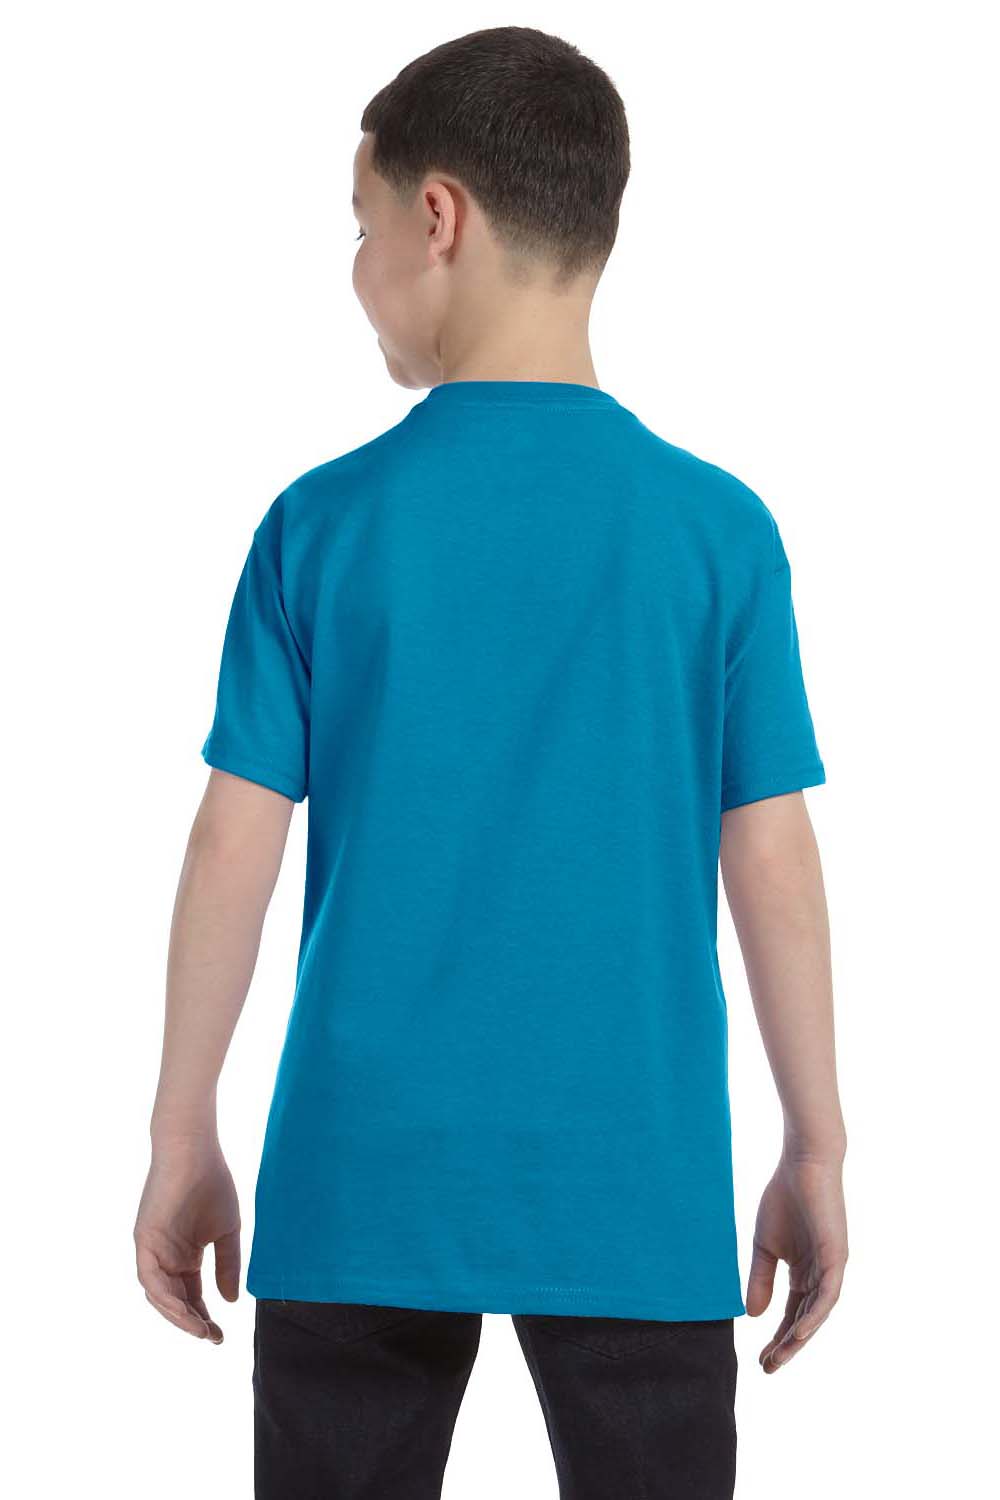 Hanes 54500 Youth ComfortSoft Short Sleeve Crewneck T-Shirt Teal Blue Back